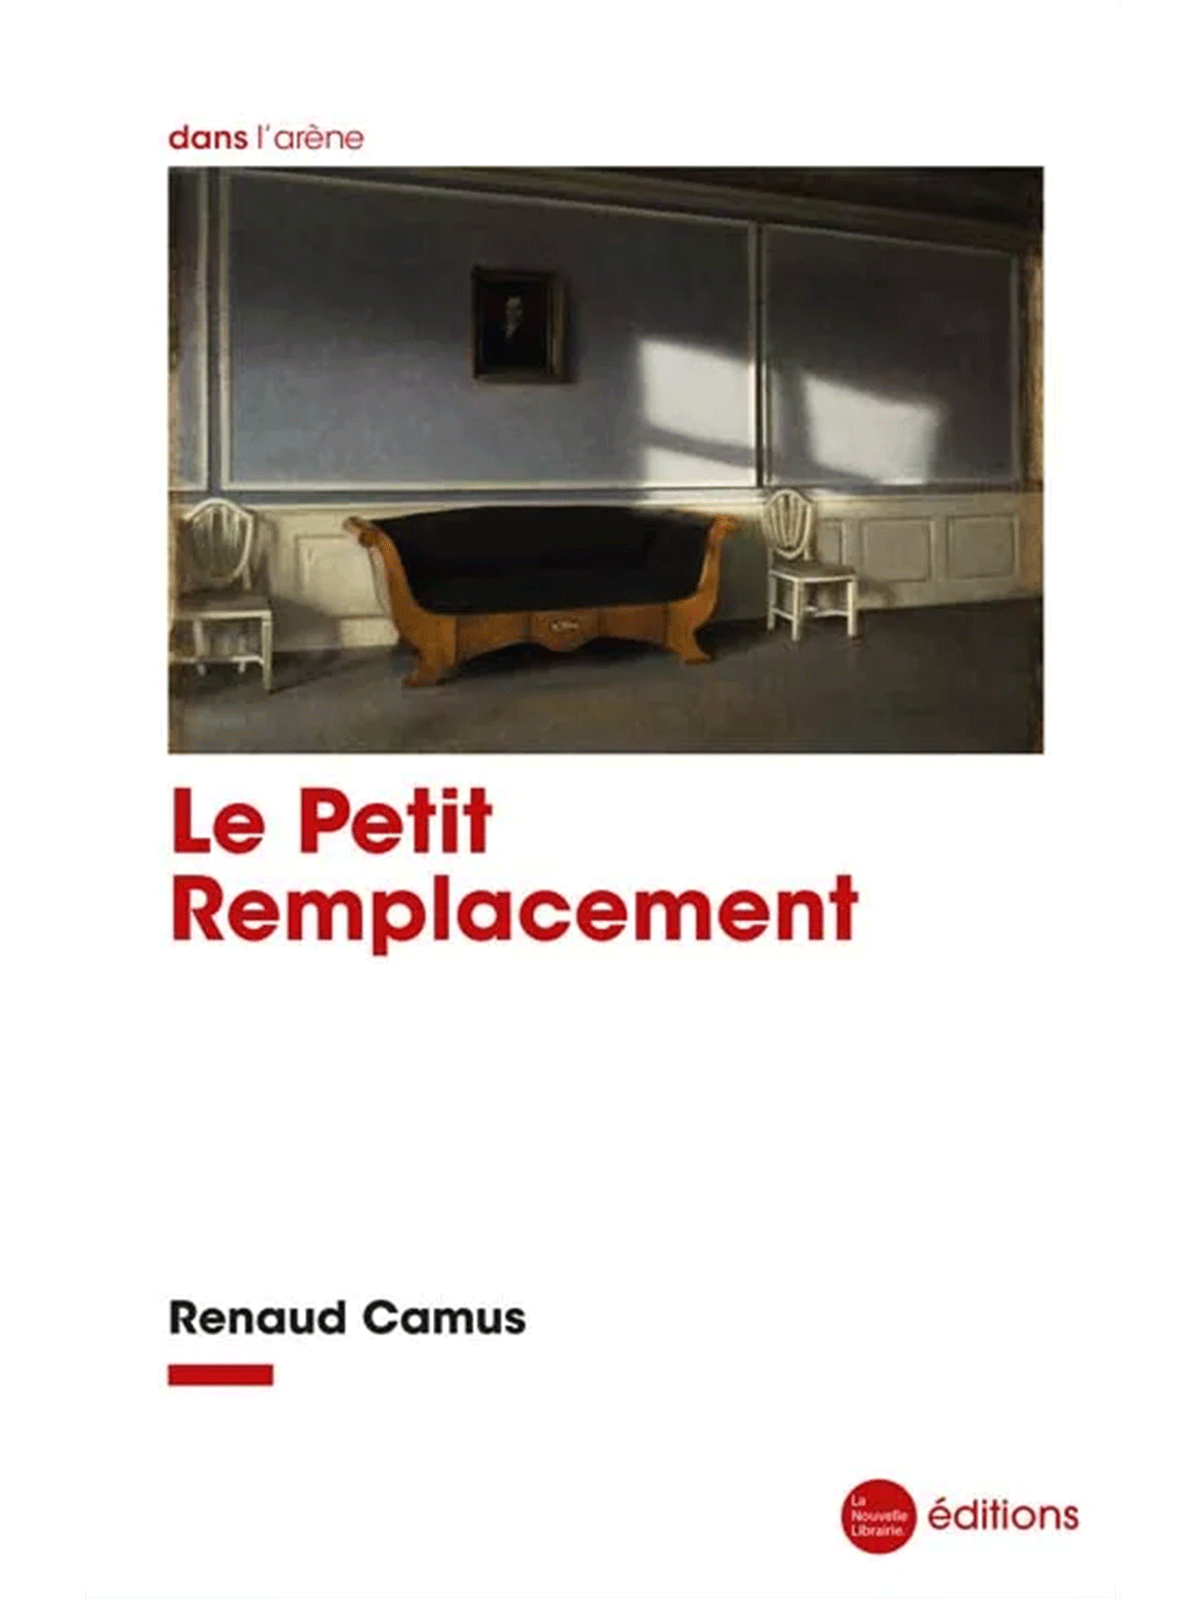 Renaud Camus : Le Petit Remplacement